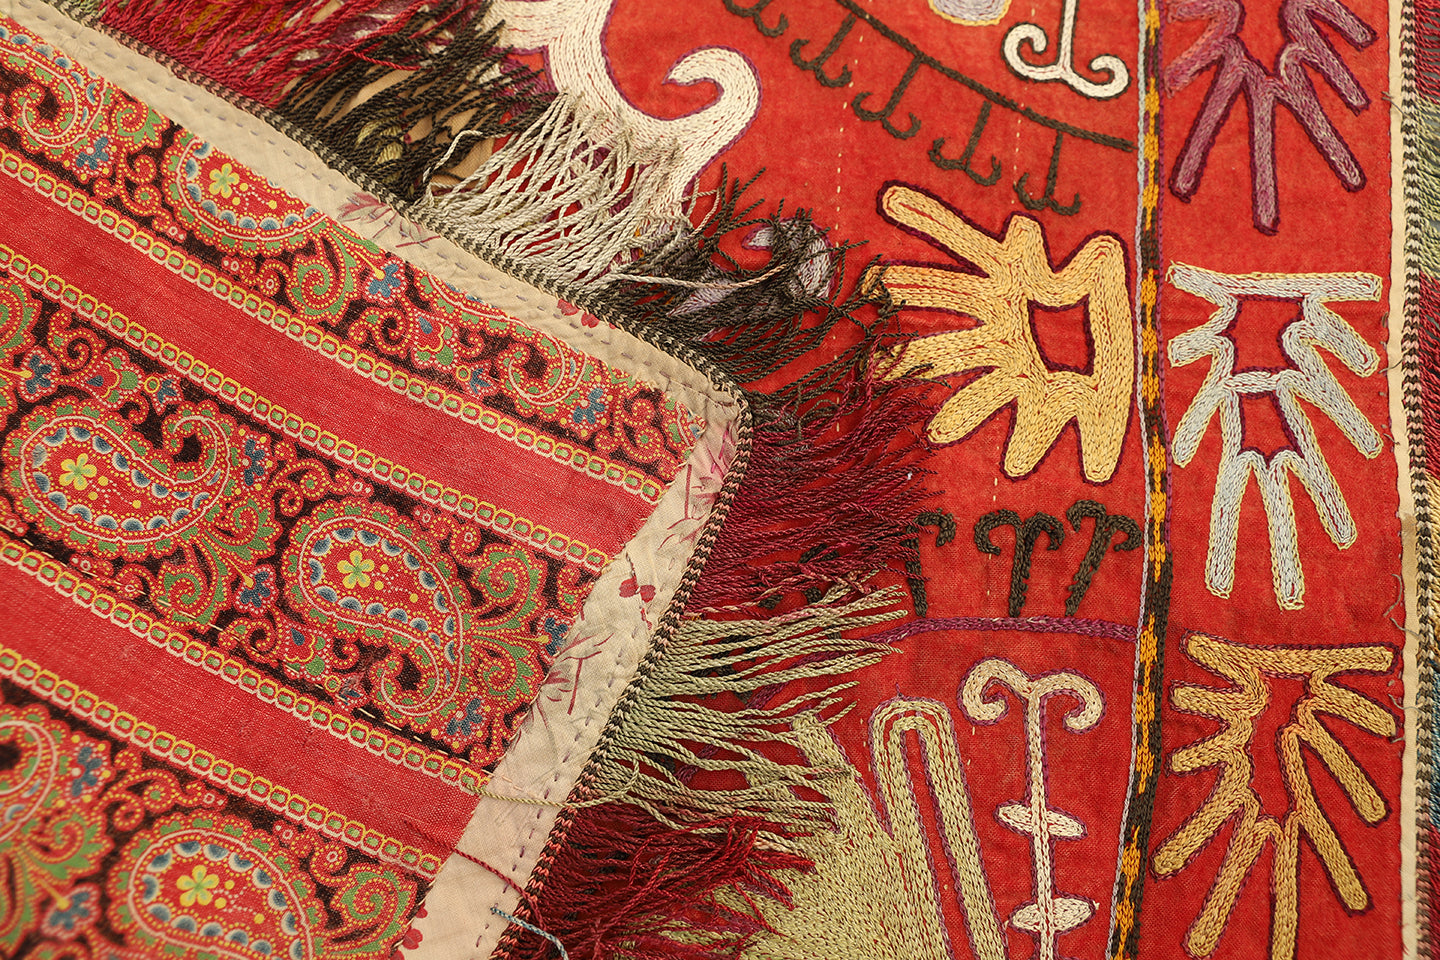 2'x2' Antique Uzbek Laqai Suzani Textile